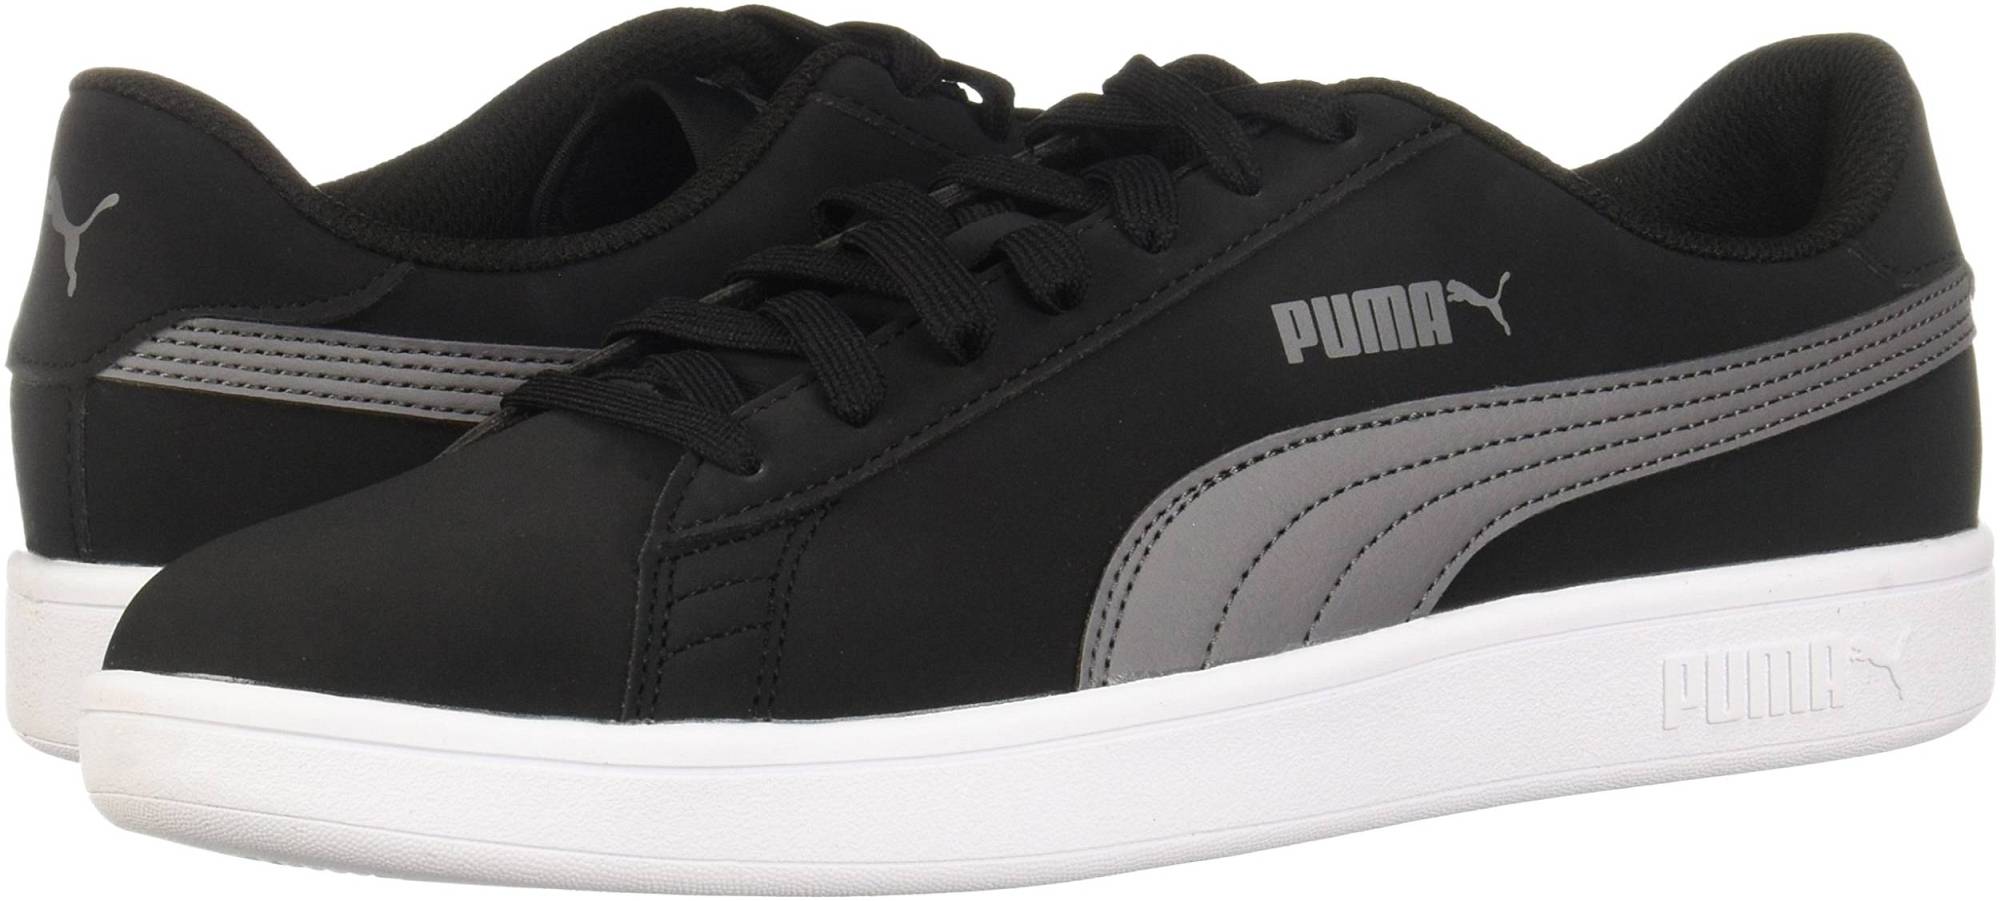 Puma Smash Buck – Shoes Reviews & Reasons To Buy